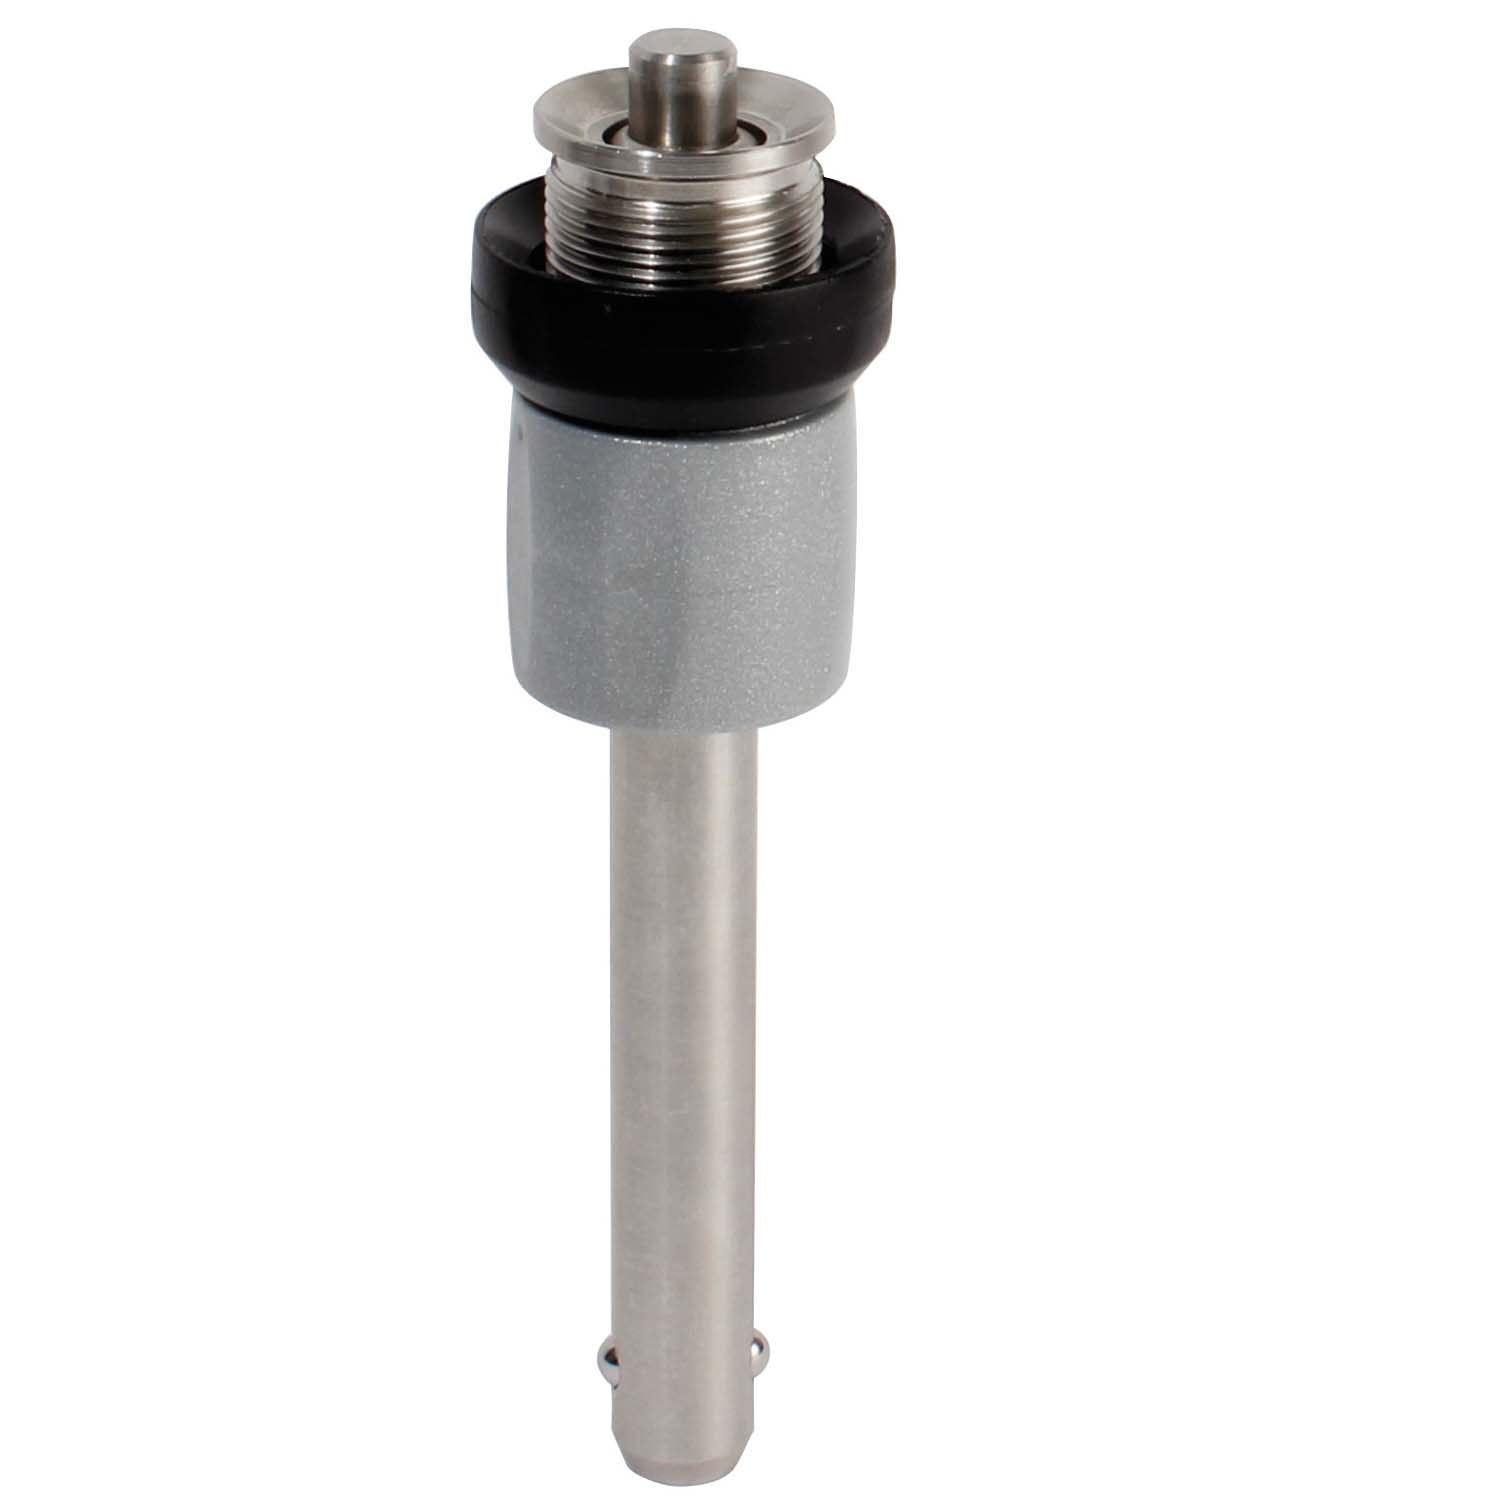 Adjustable ball pin hardened stainless steel - adjustable -  - 